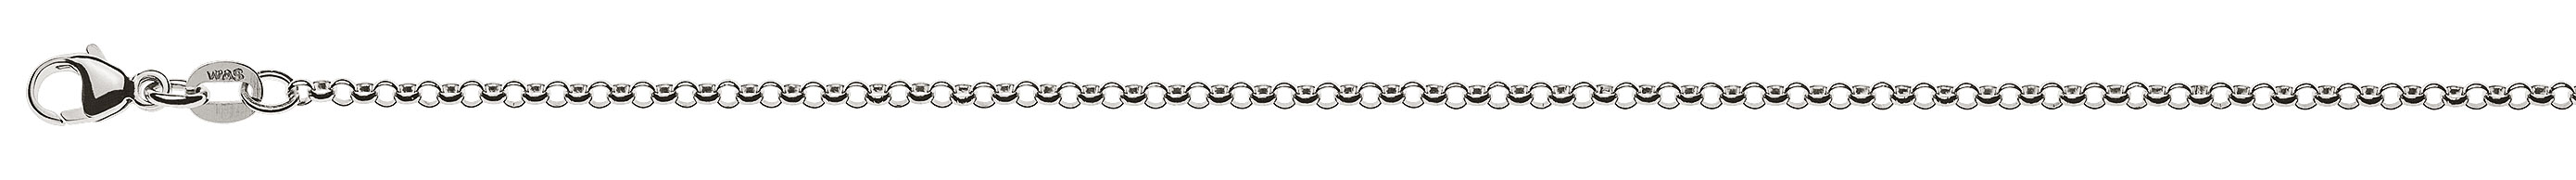 AURONOS Prestige Necklace white gold 18K pea chain 38cm 2.0mm